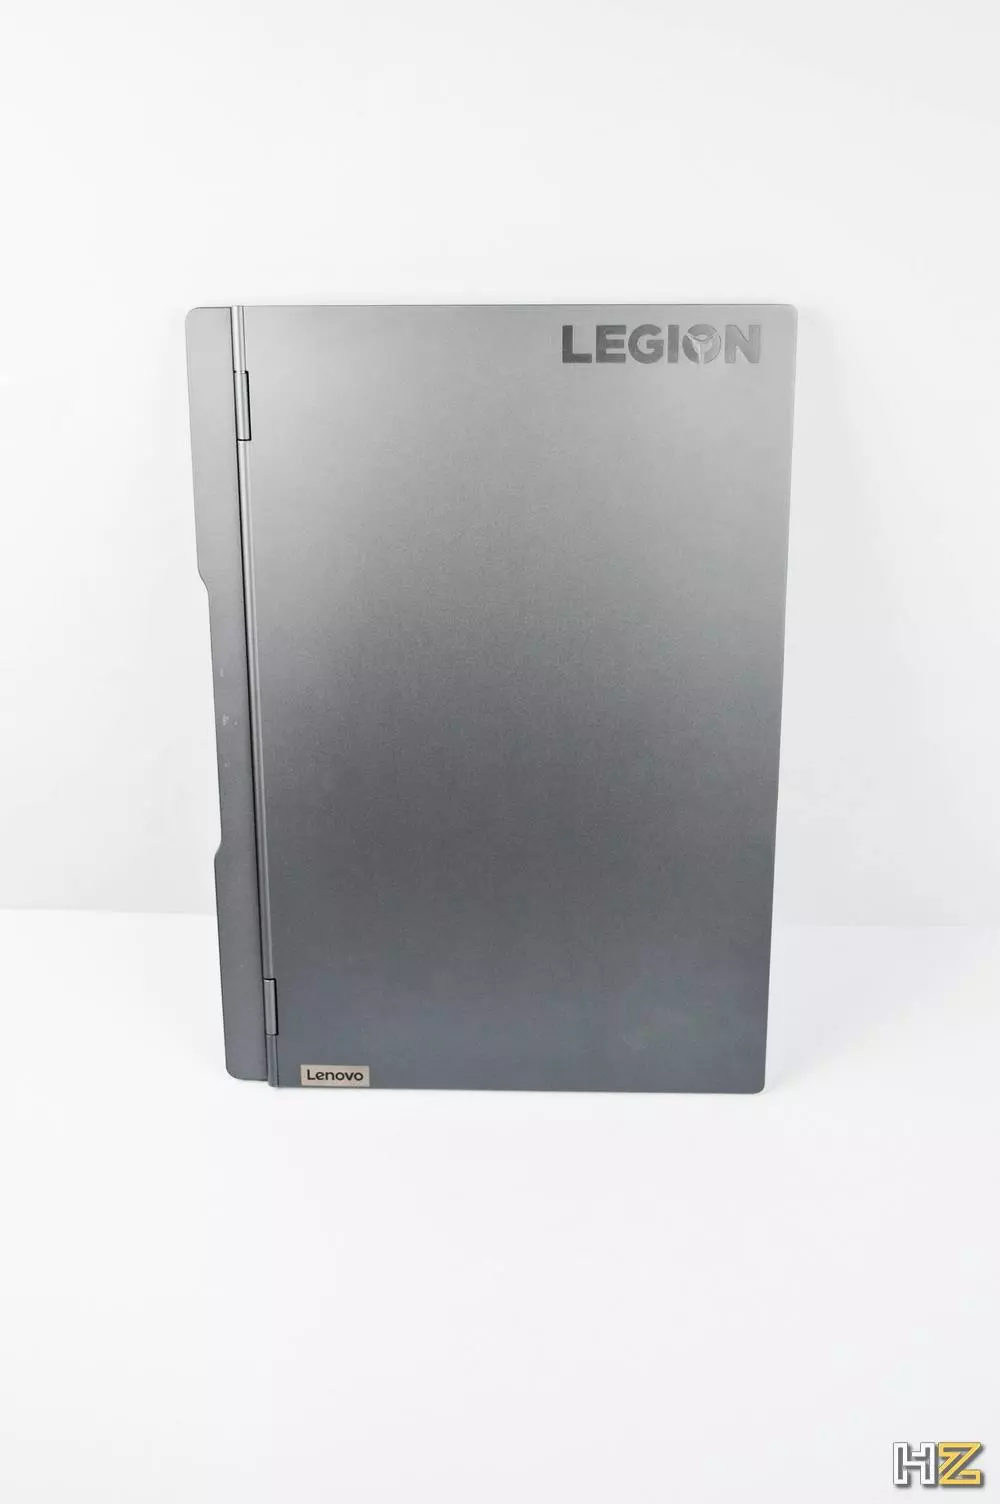 Lenovo Legion S7 - Review 3